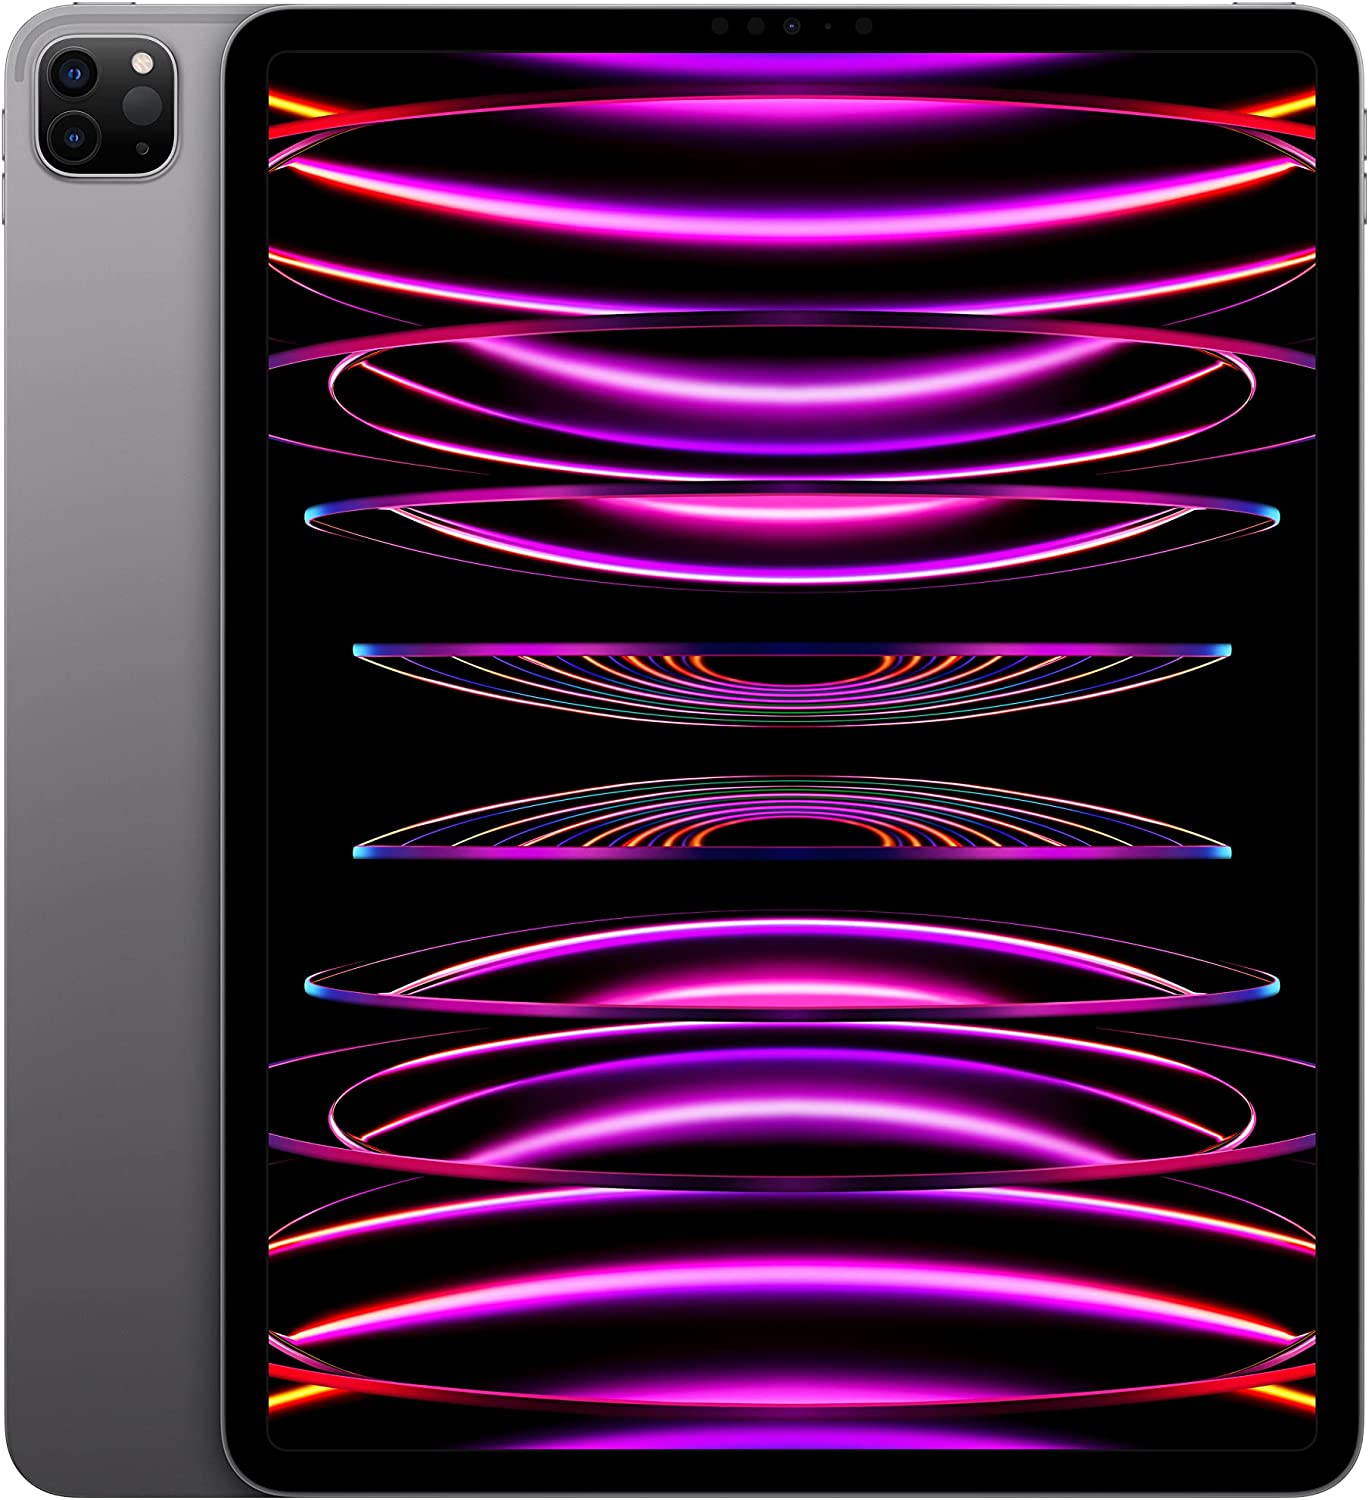 Apple 12.9-inch iPad Pro (Wi-Fi, 128GB) 2022  - Space Grey (6th Generation) refurbished